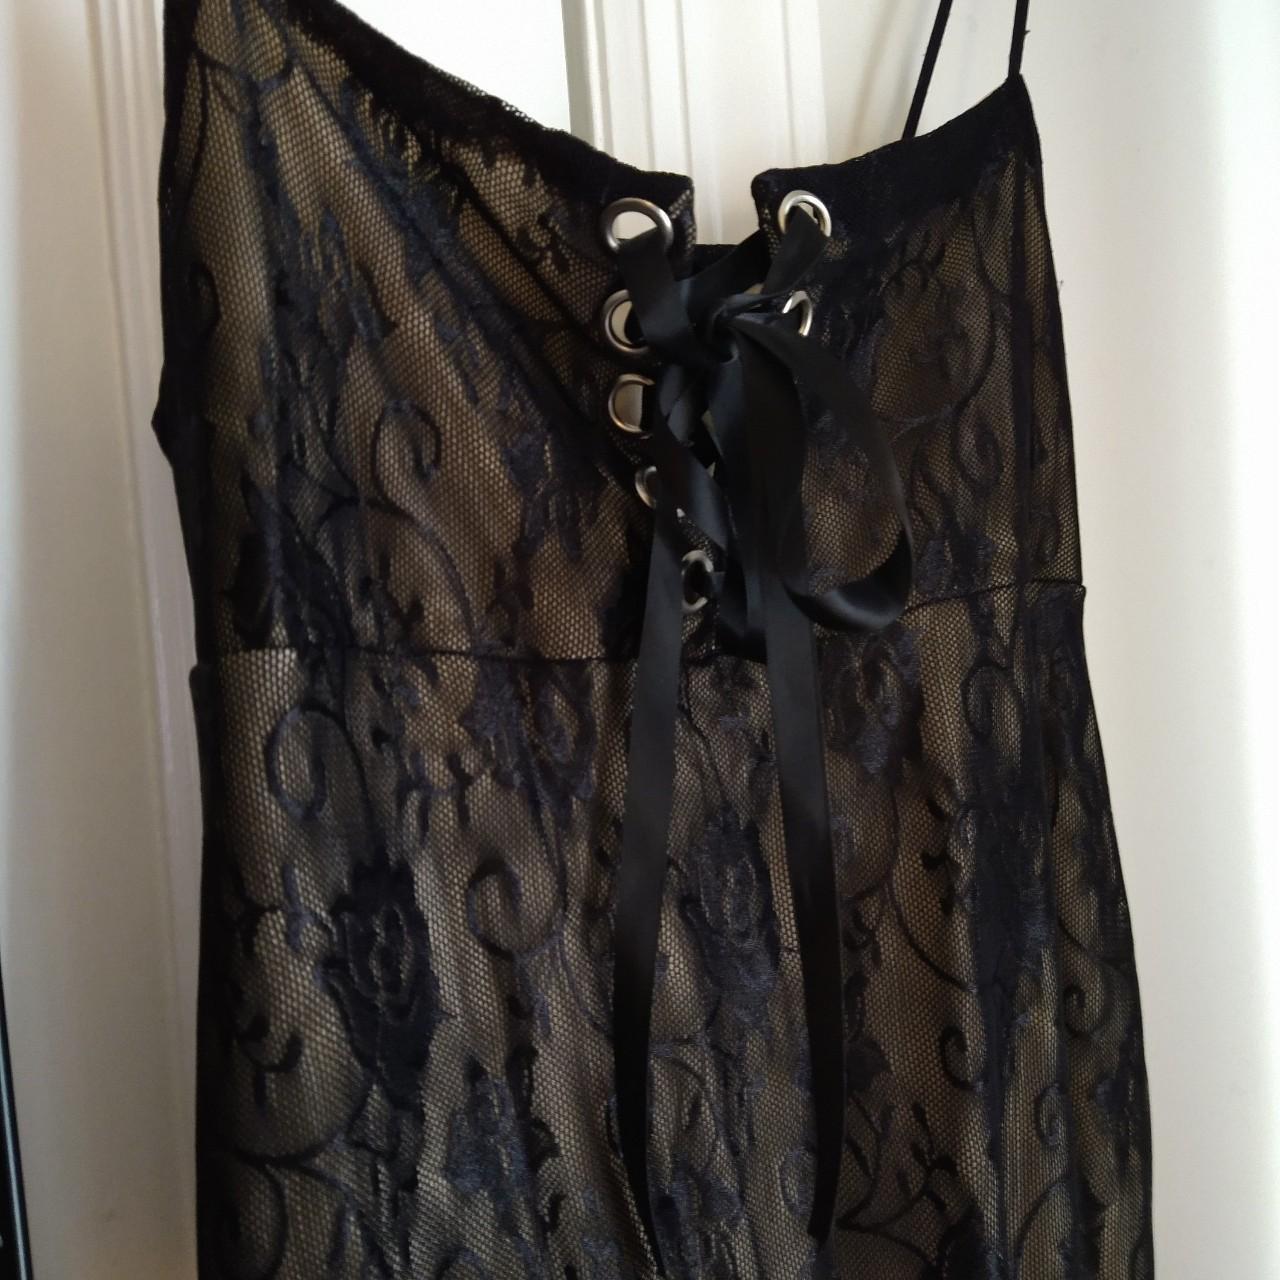 Romwe Women's Black and Tan Dress (3)